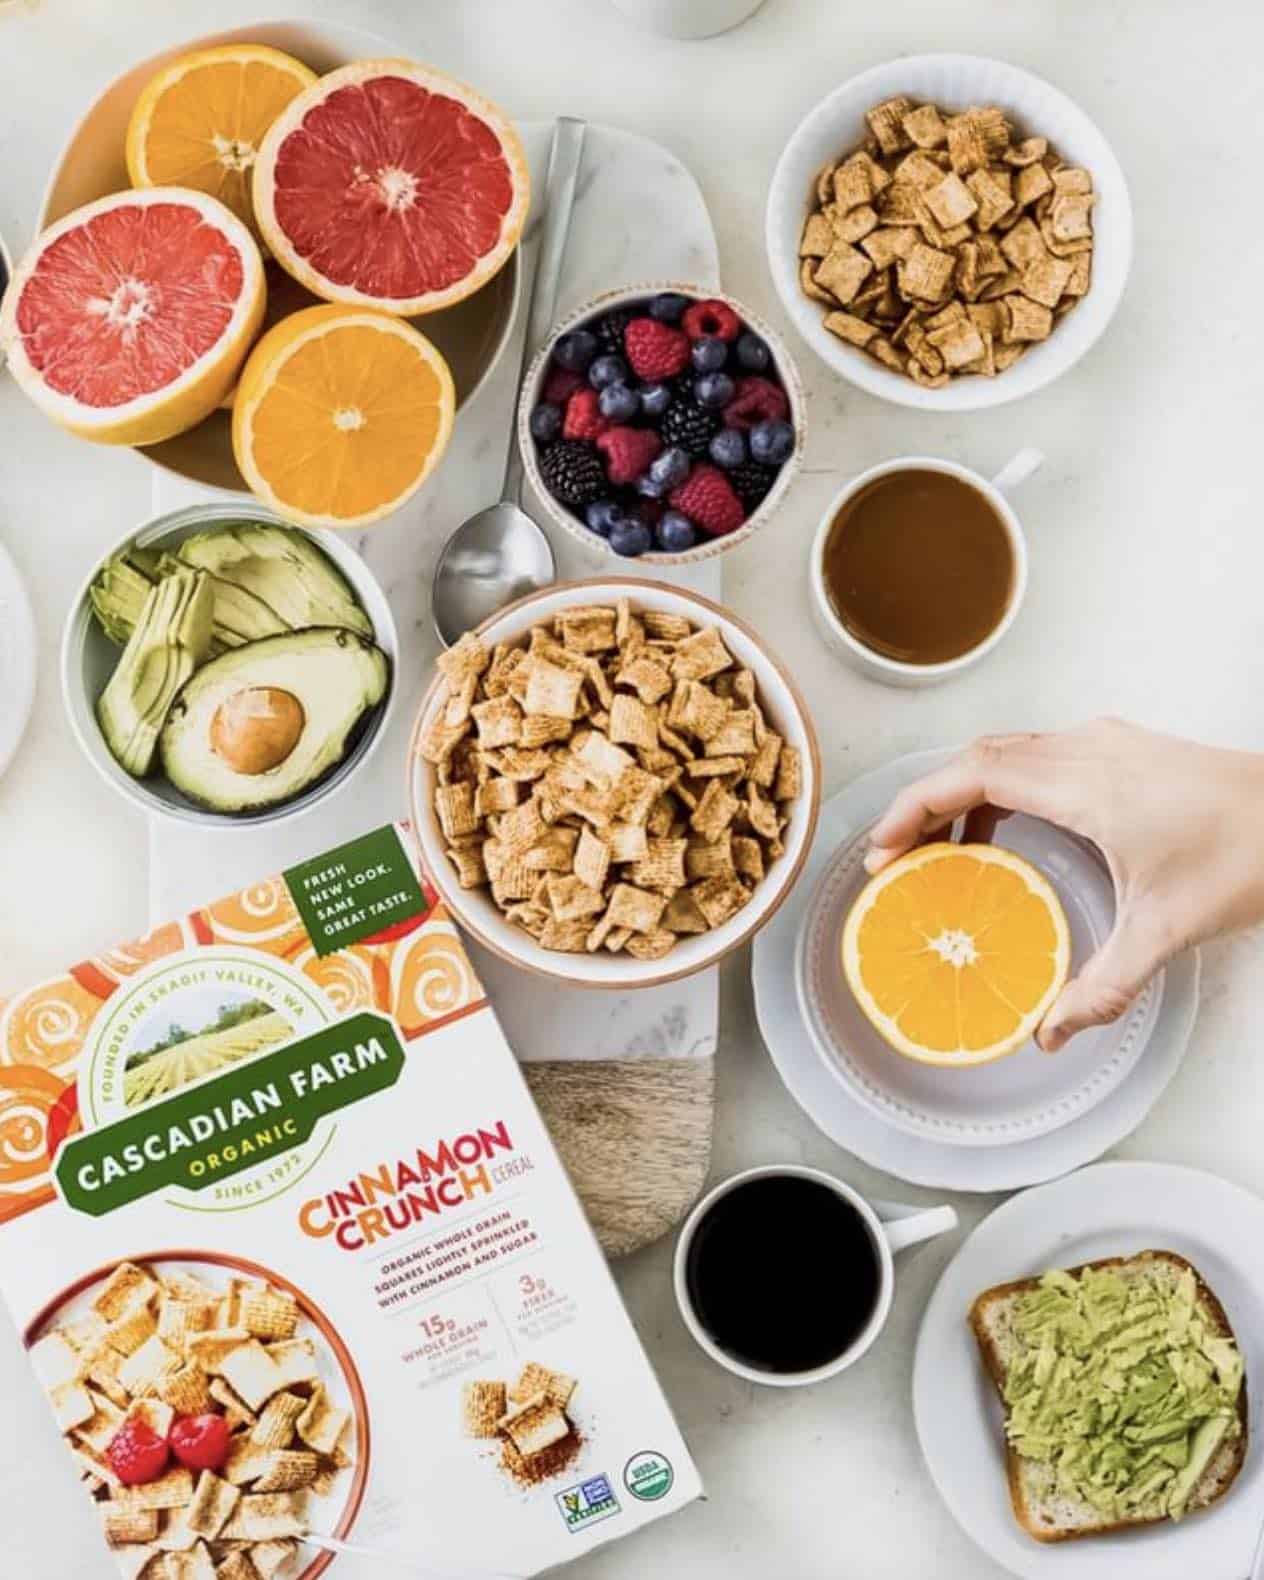 Cascadian Farm Organic Vegan Breakfast Cereal Cinnamon Crunch Photo